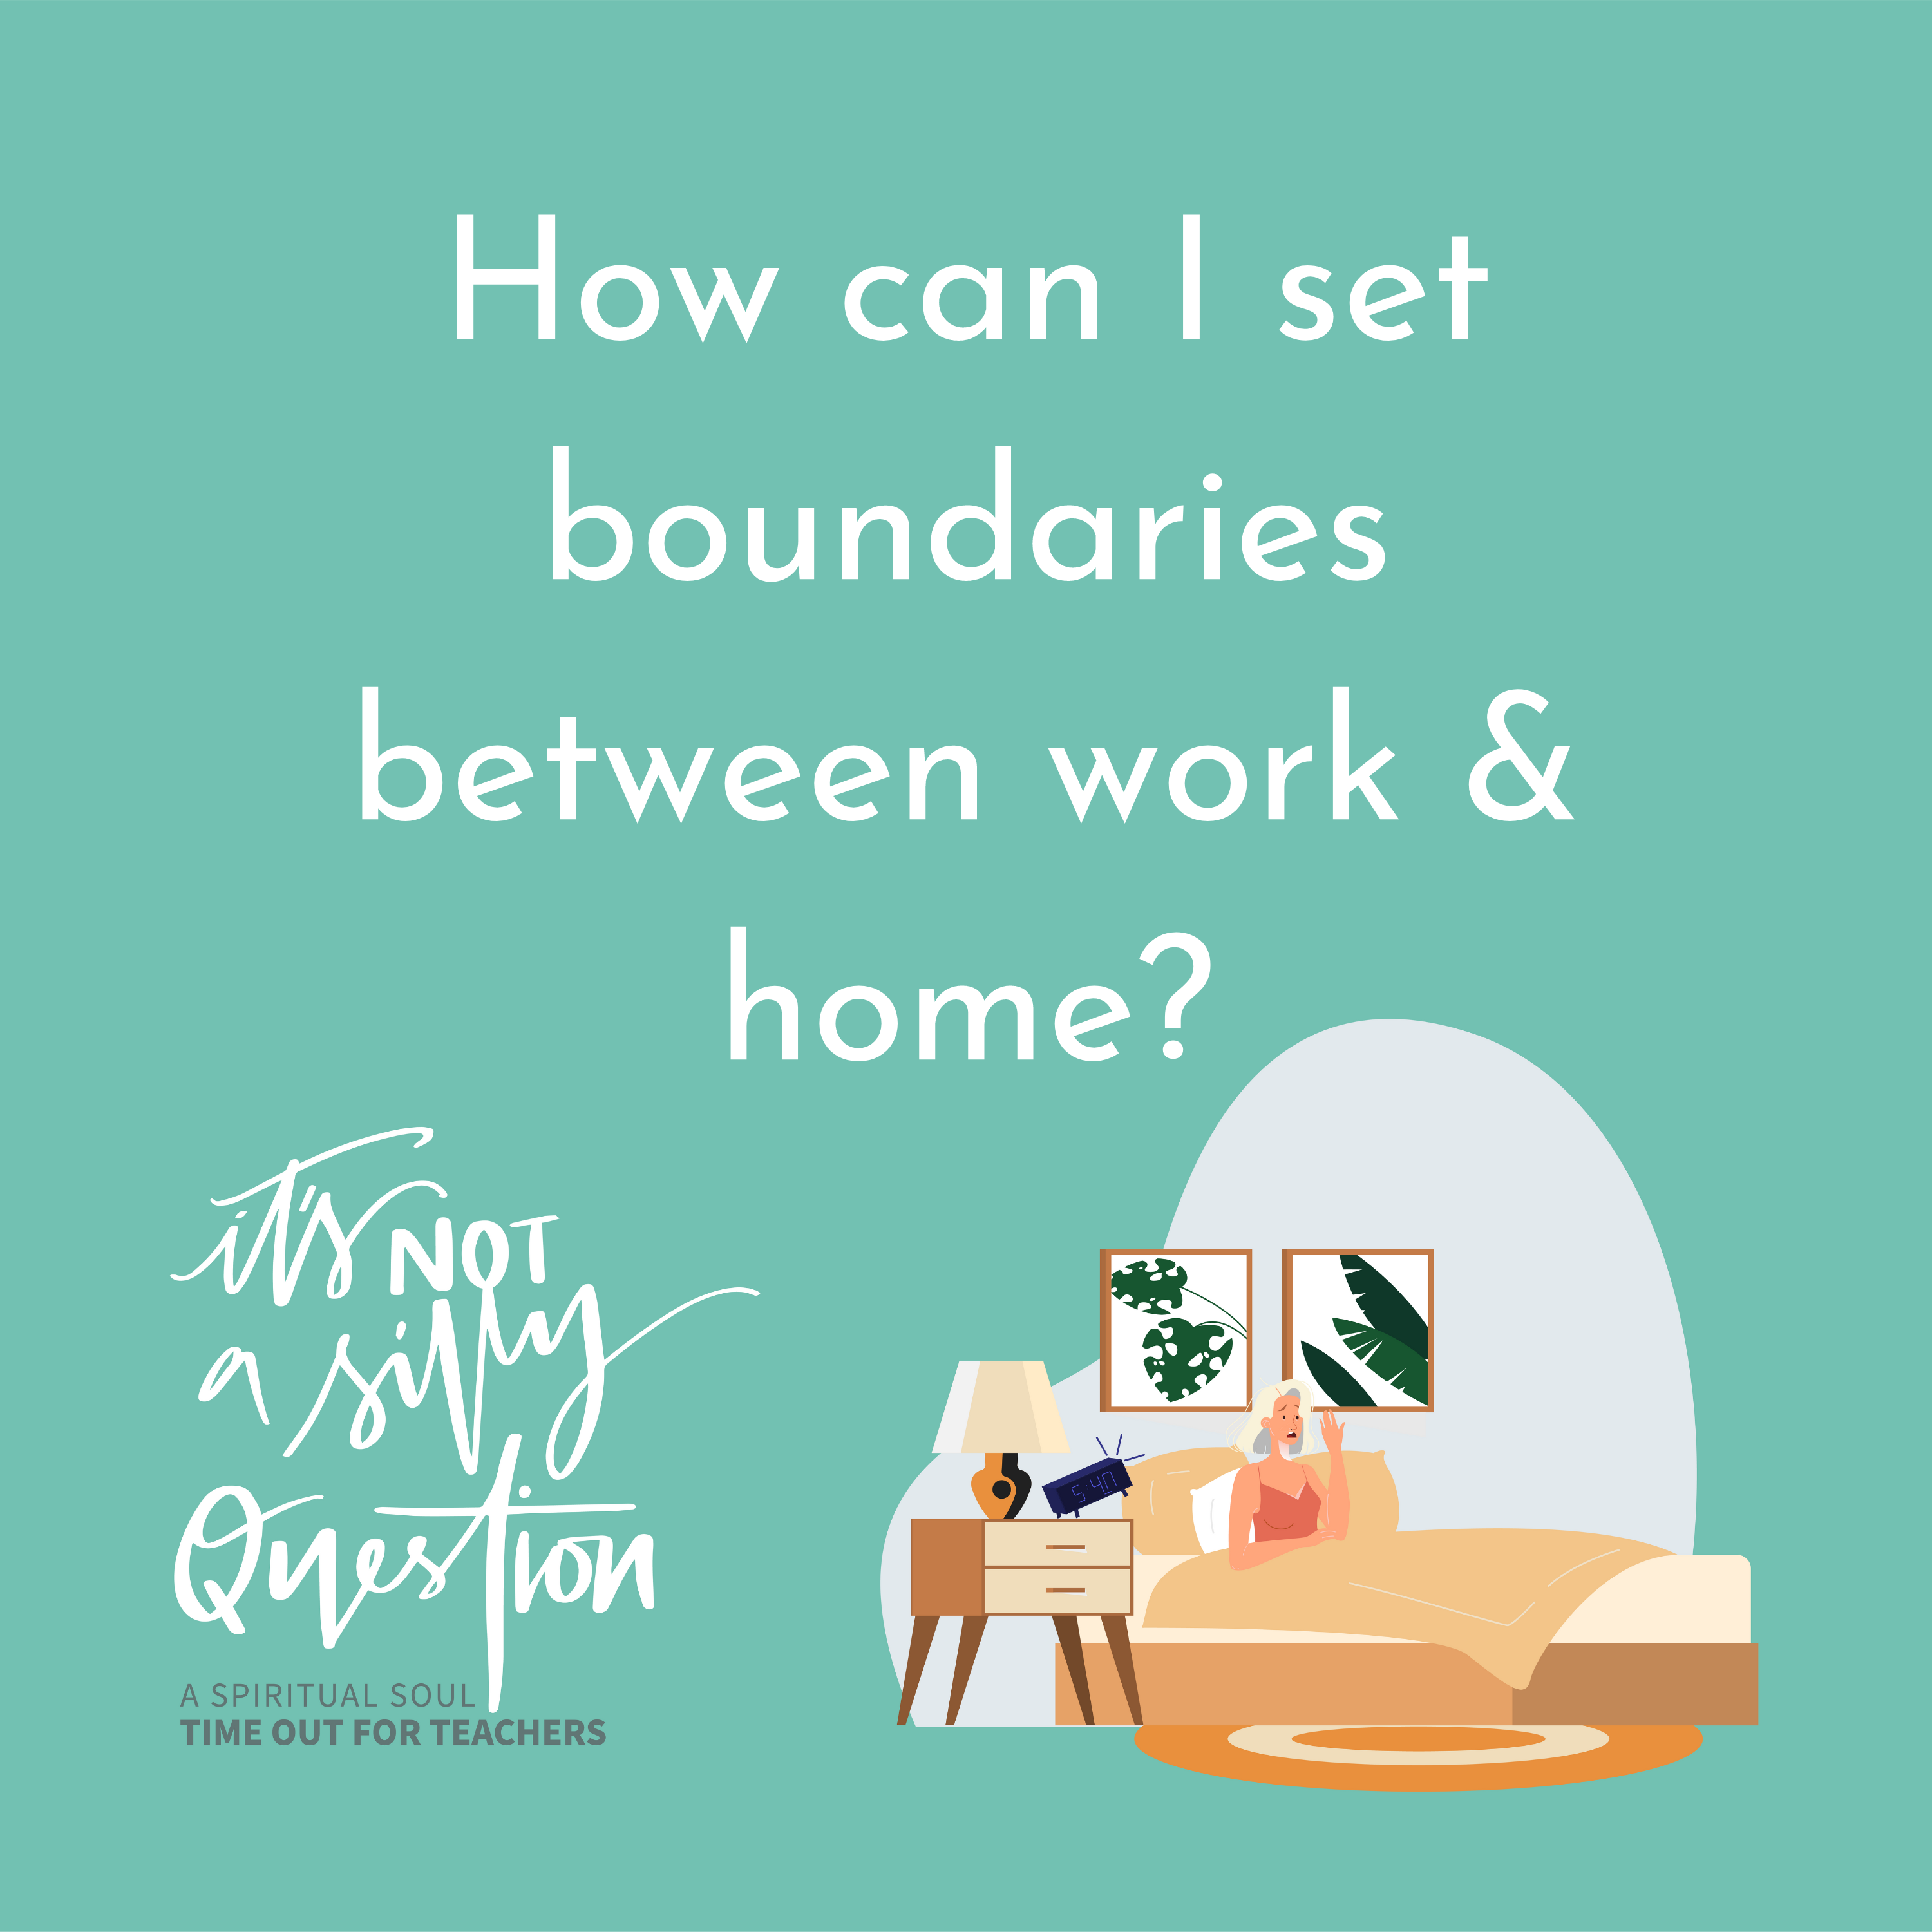 How can I set boundaries between work & home?